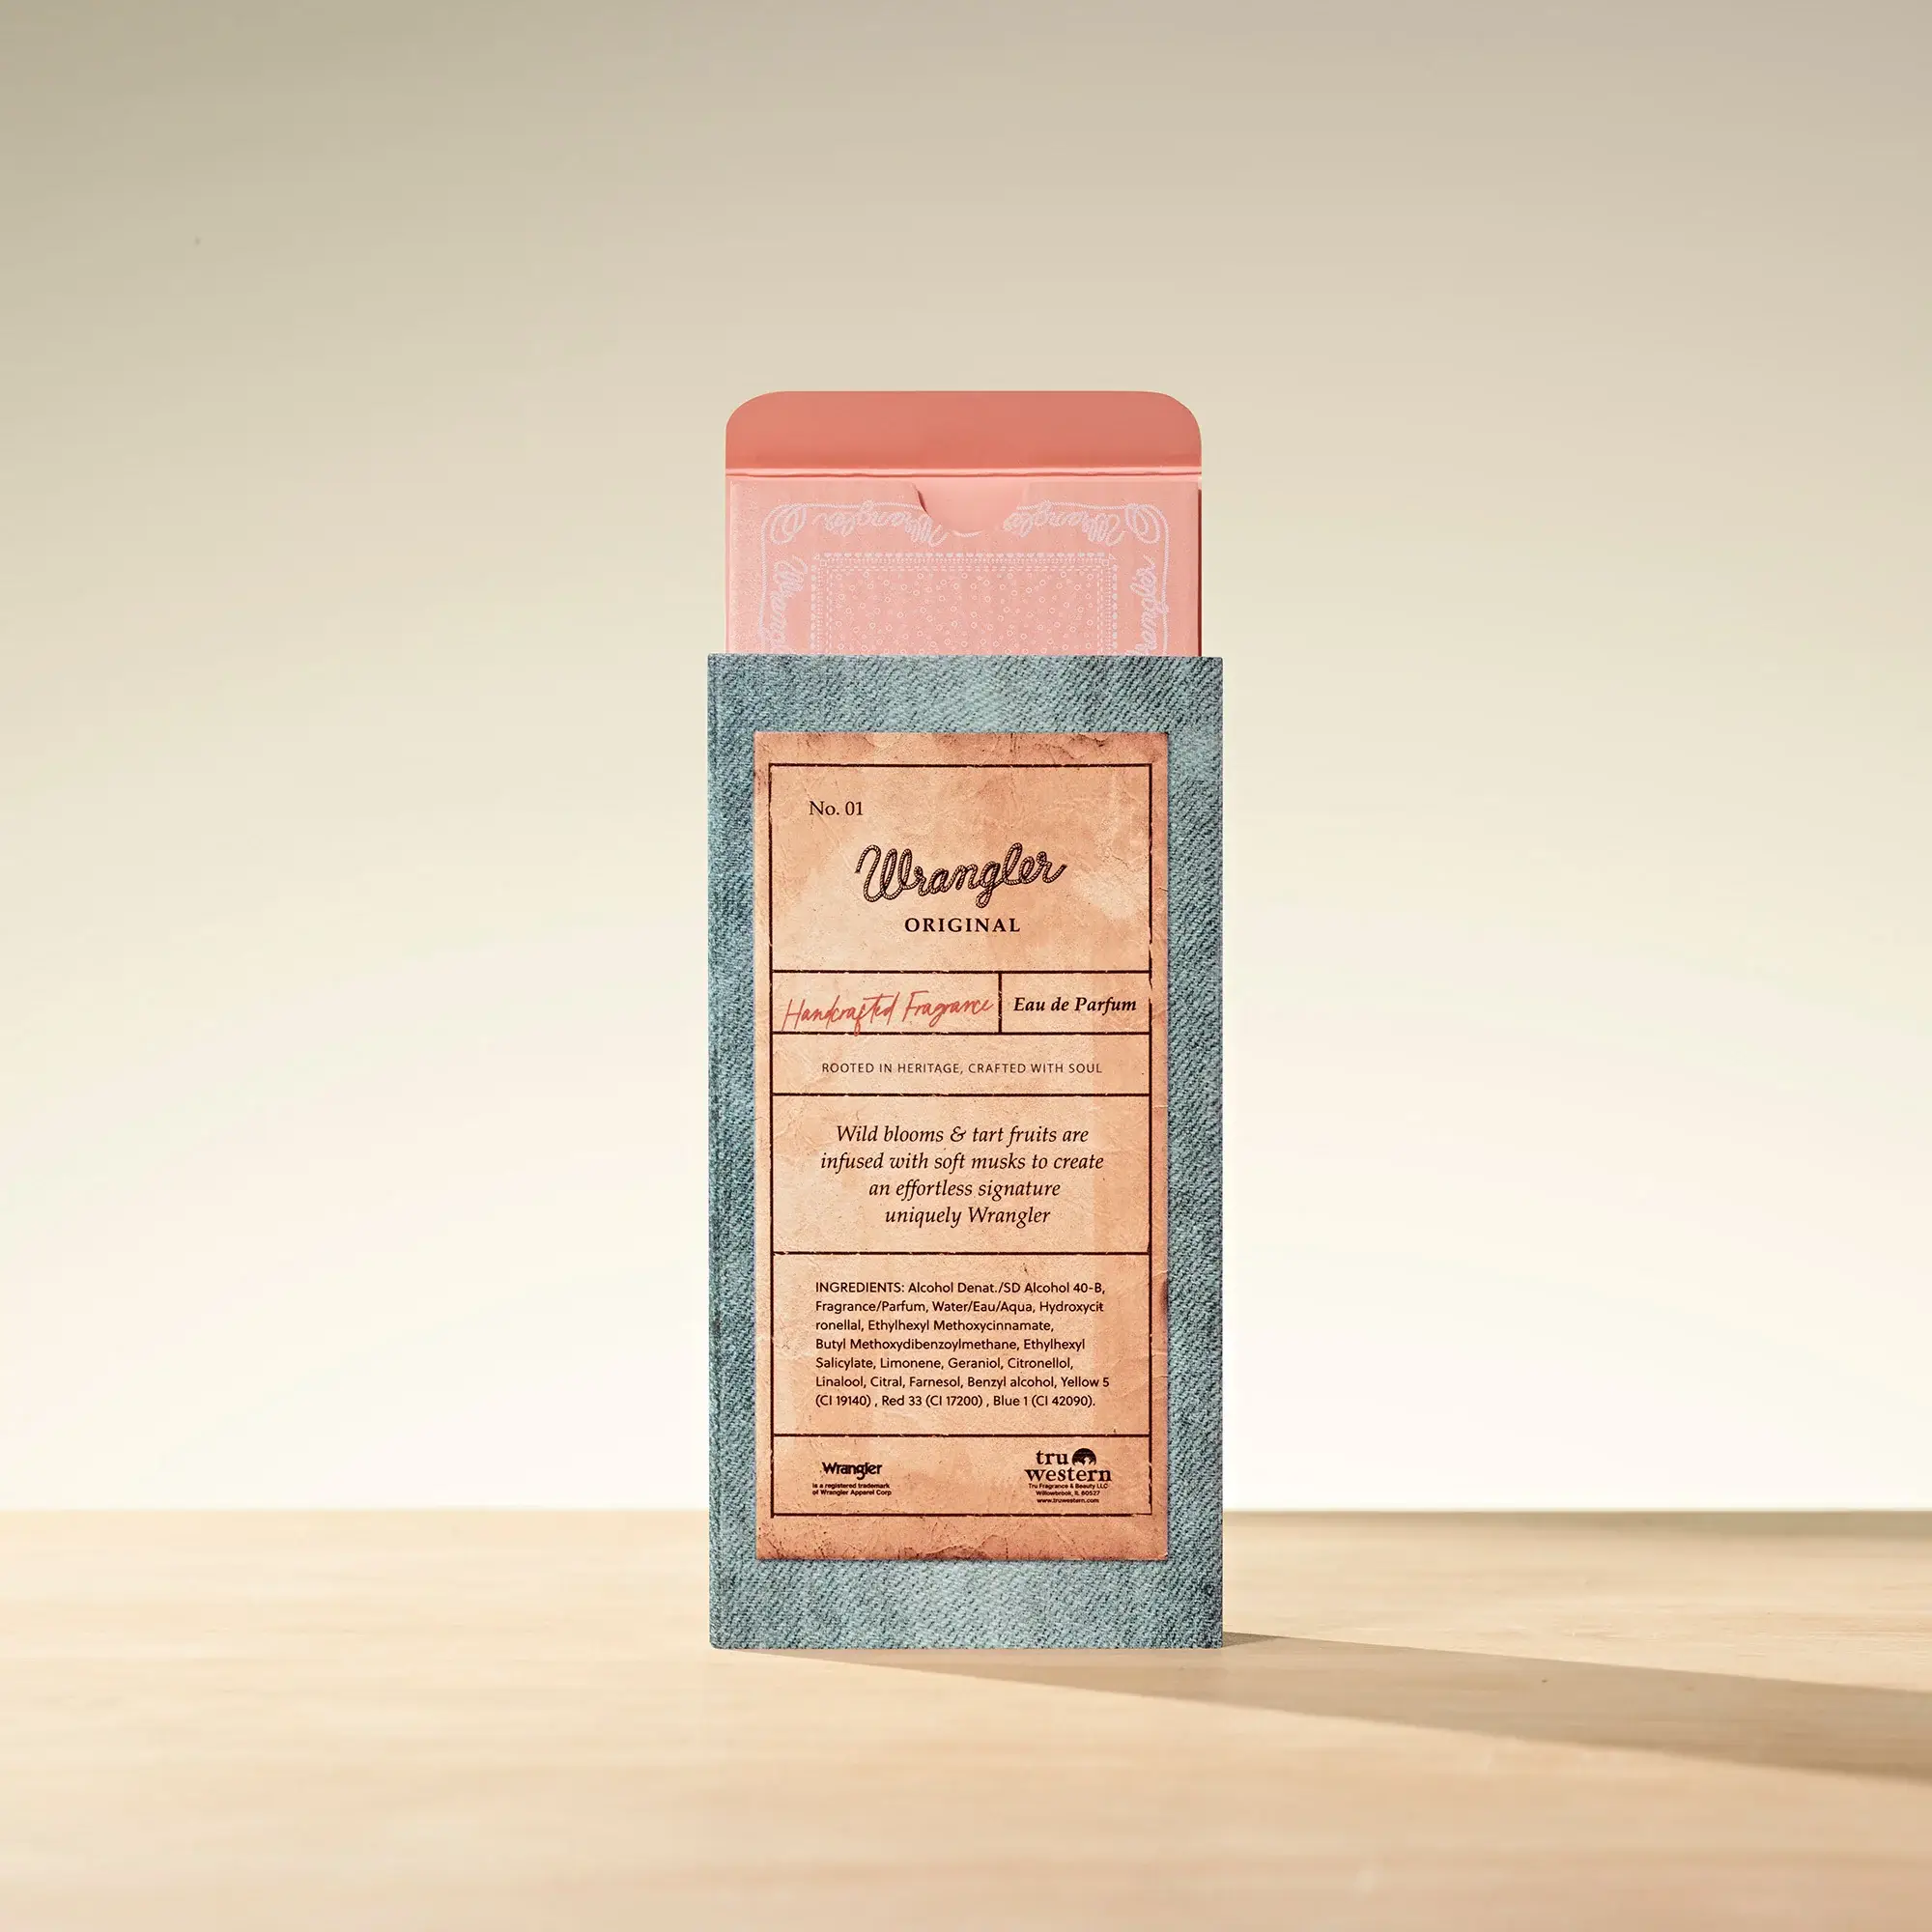 back of the box of the Wrangler Original Perfume